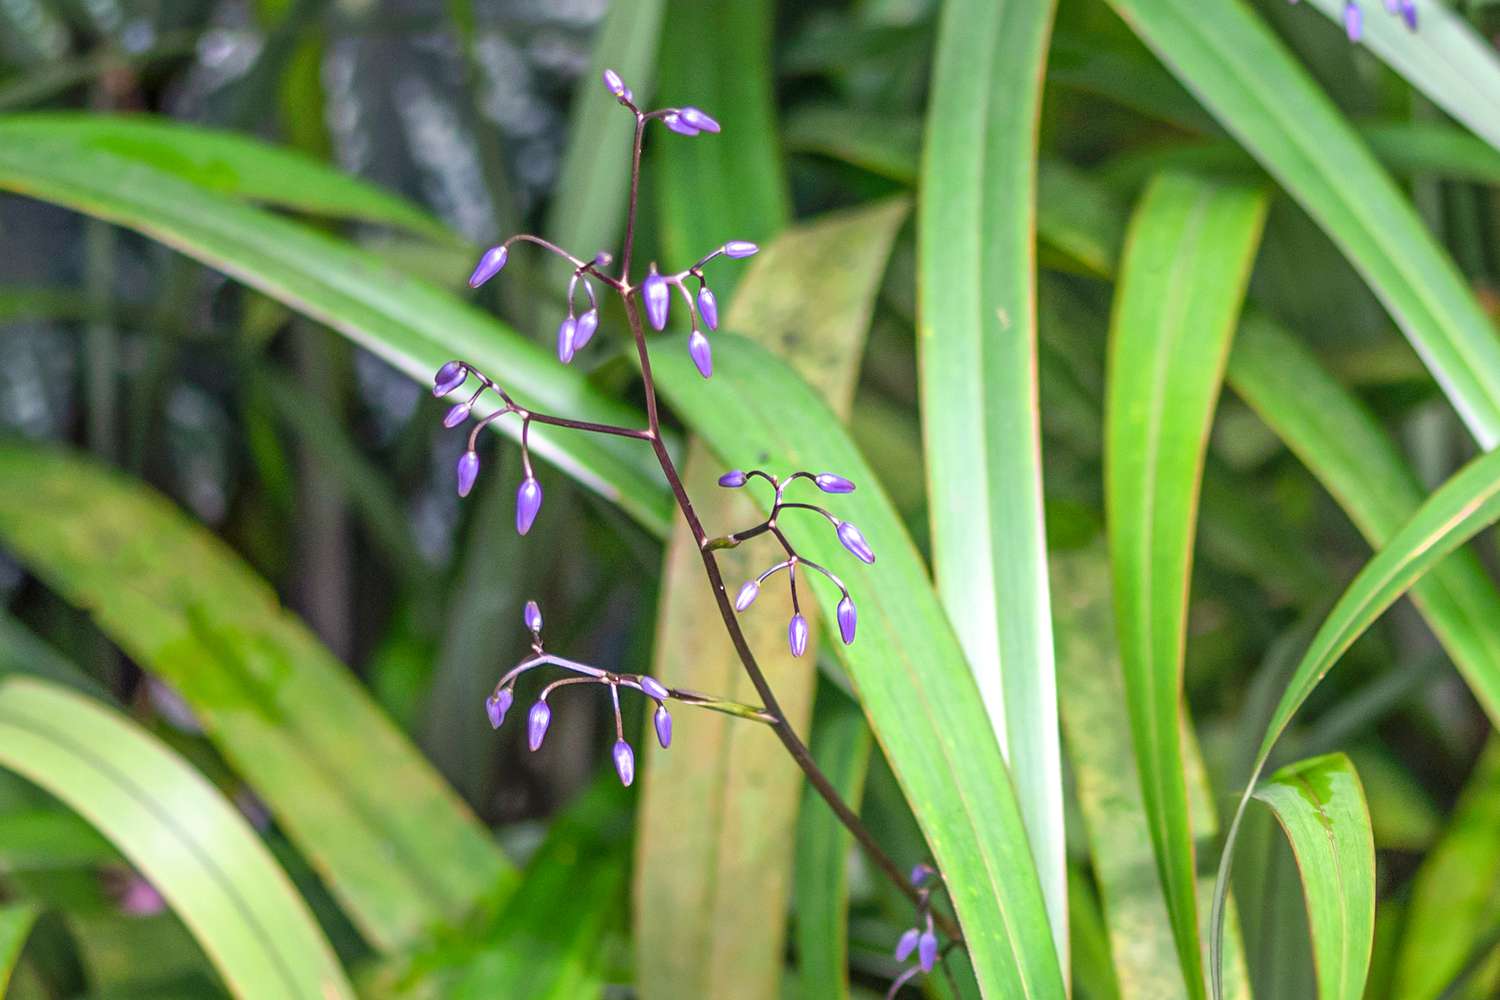 Flachslilie mit winzigen violetten Blütenrispen an dünnem Stiel